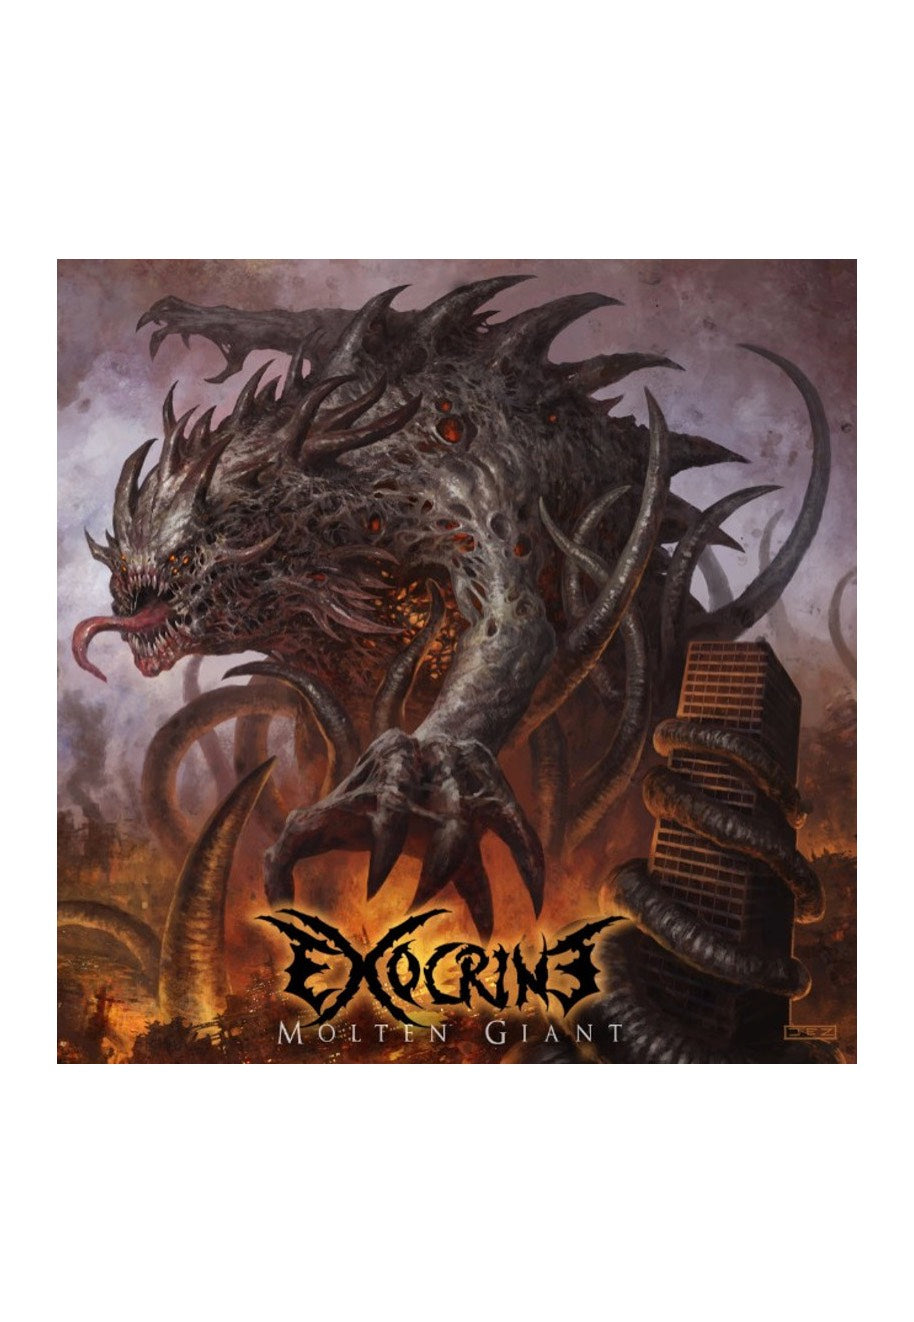 Exocrine - Molten Giant - CD